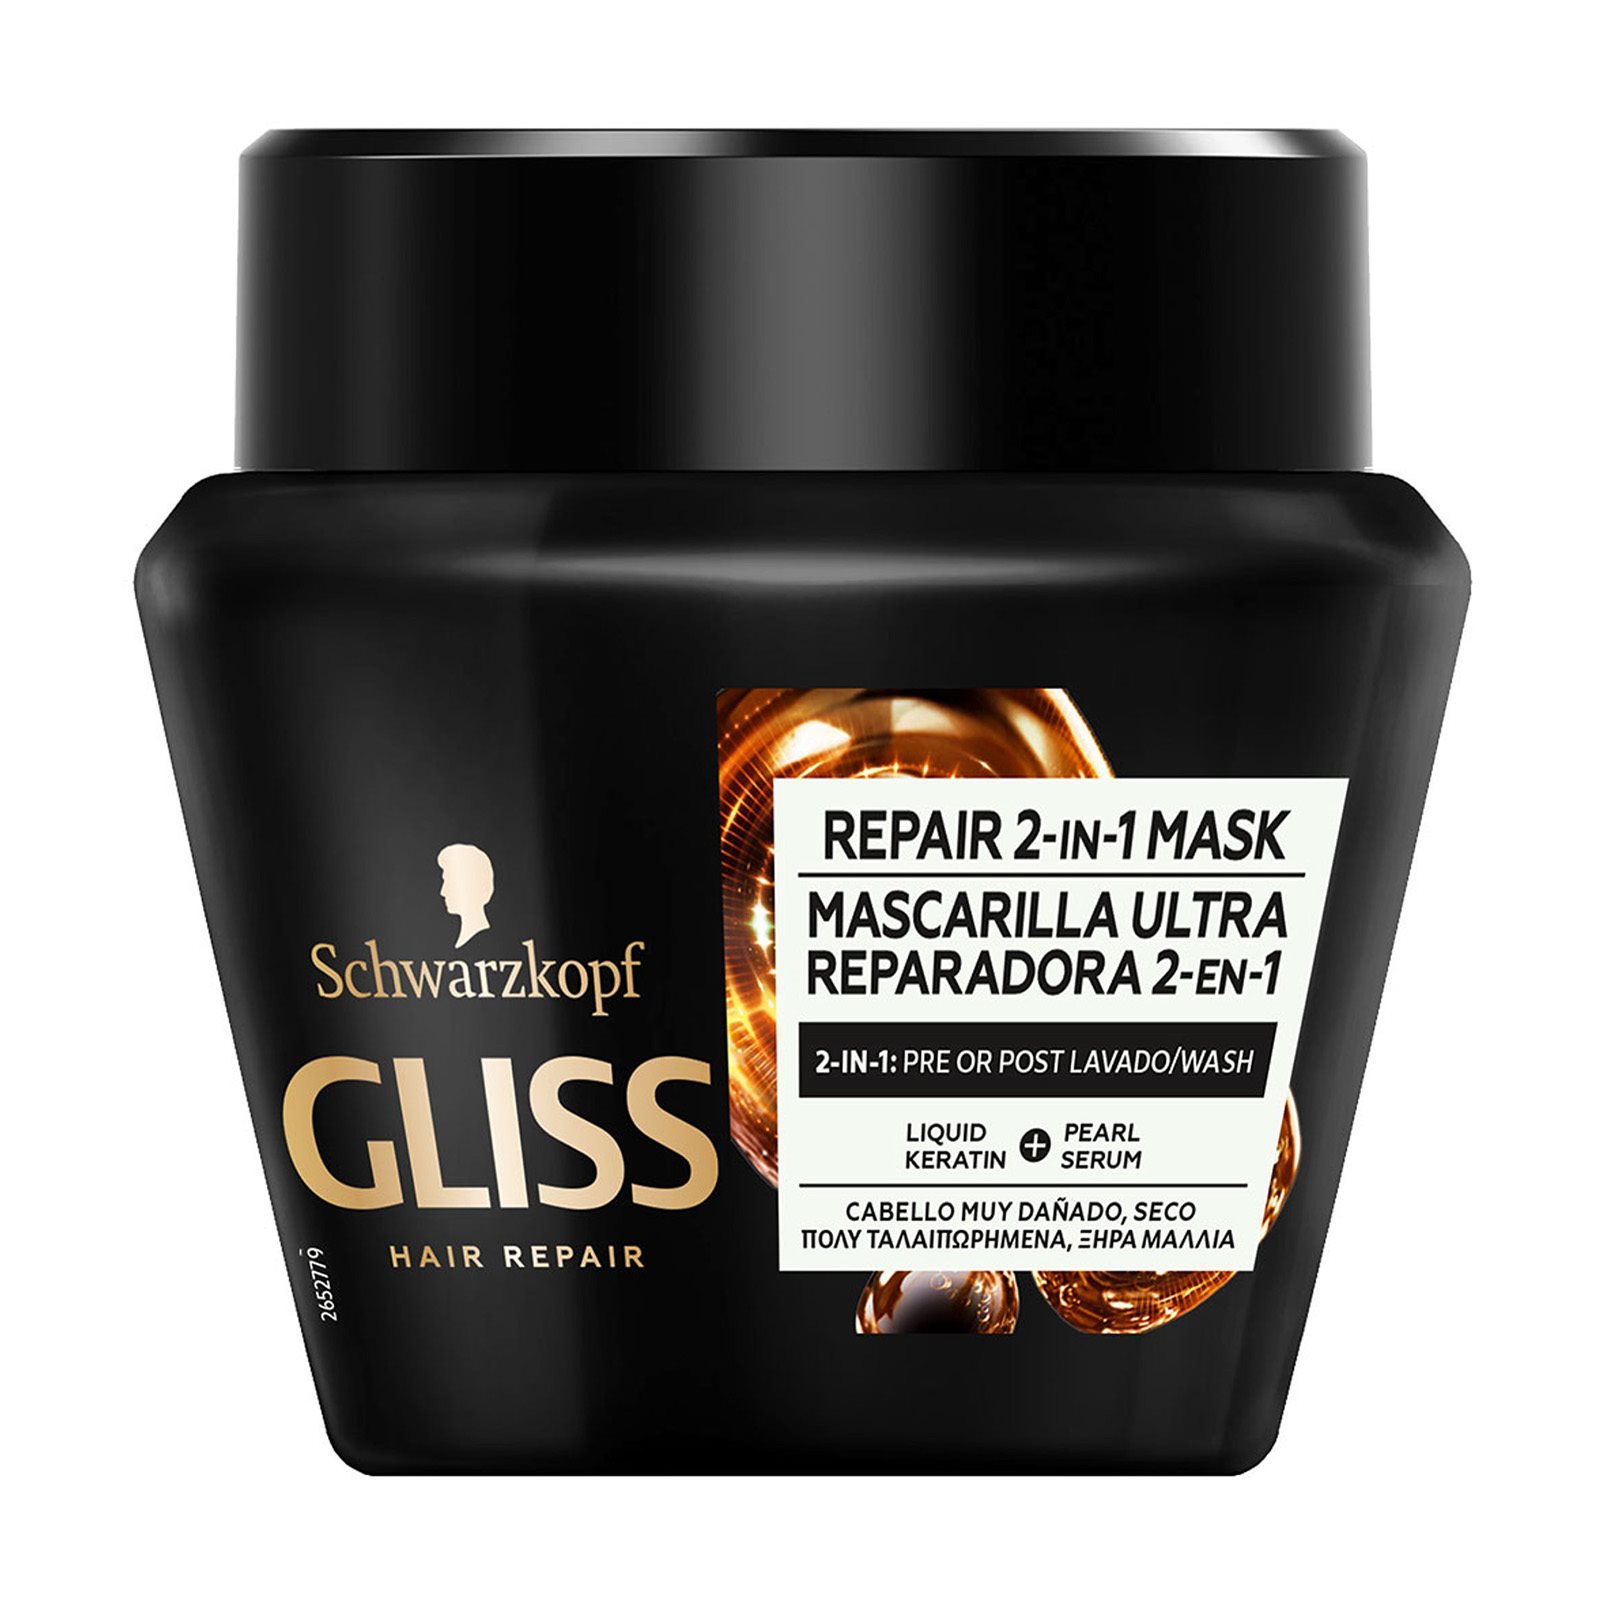 Маска для волос repair отзывы. Маска для волос Schwarzkopf Gliss strength 2-in-1 treatment. Gliss Kur маска для волос. Gliss Kur экстремальное восстановление. Gliss Kur маска экстремальное восстановление.